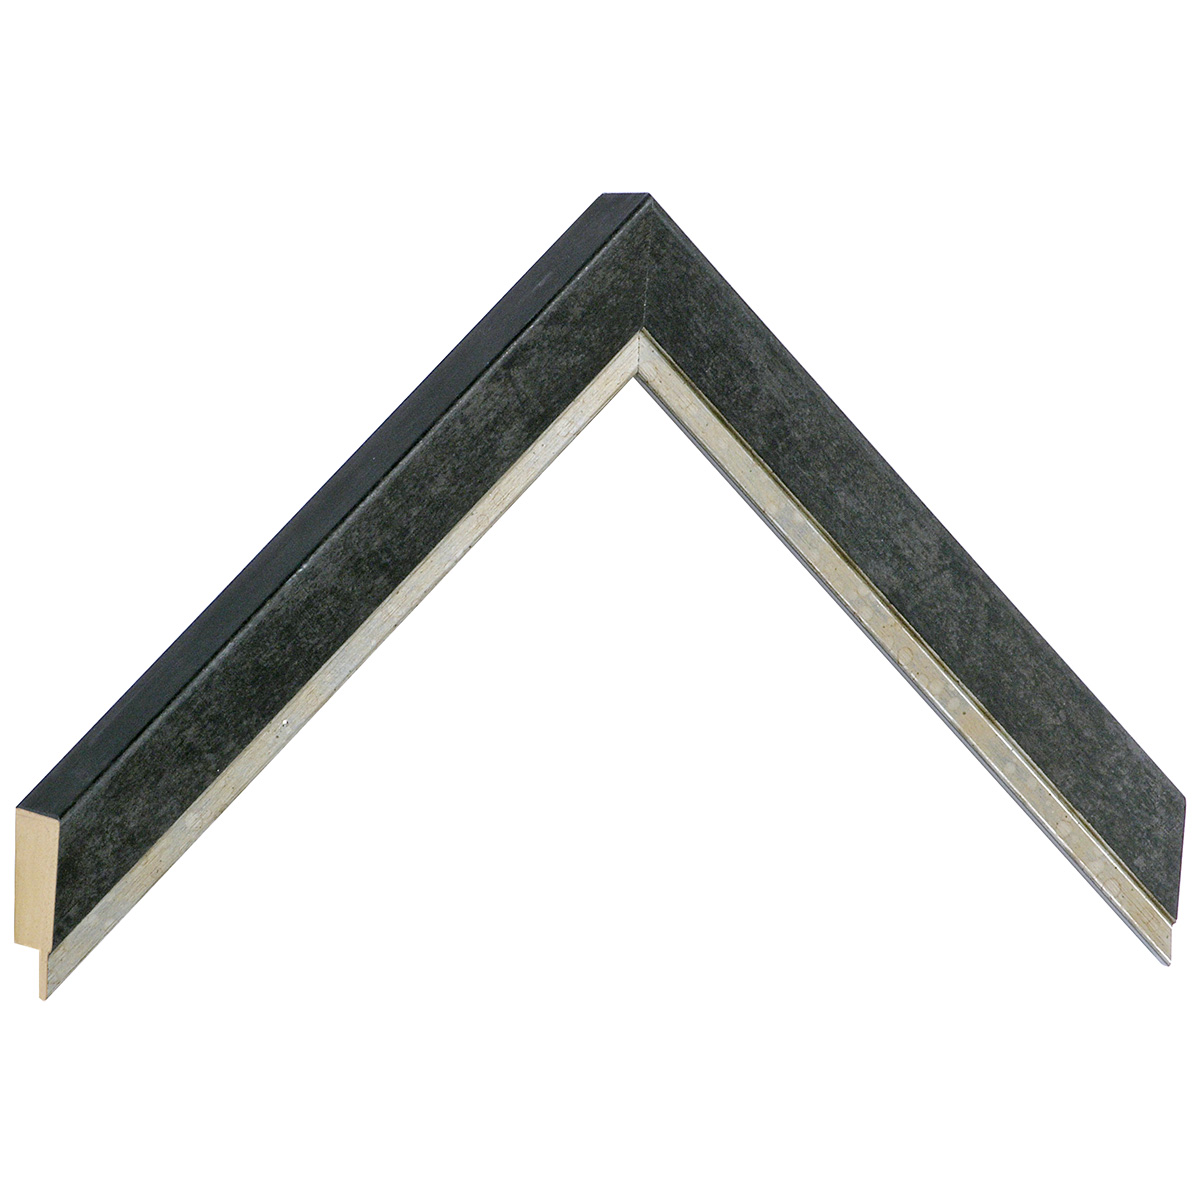 Moulding finger-jointed pine - width 22mm height 22 - black, silver ed - Sample